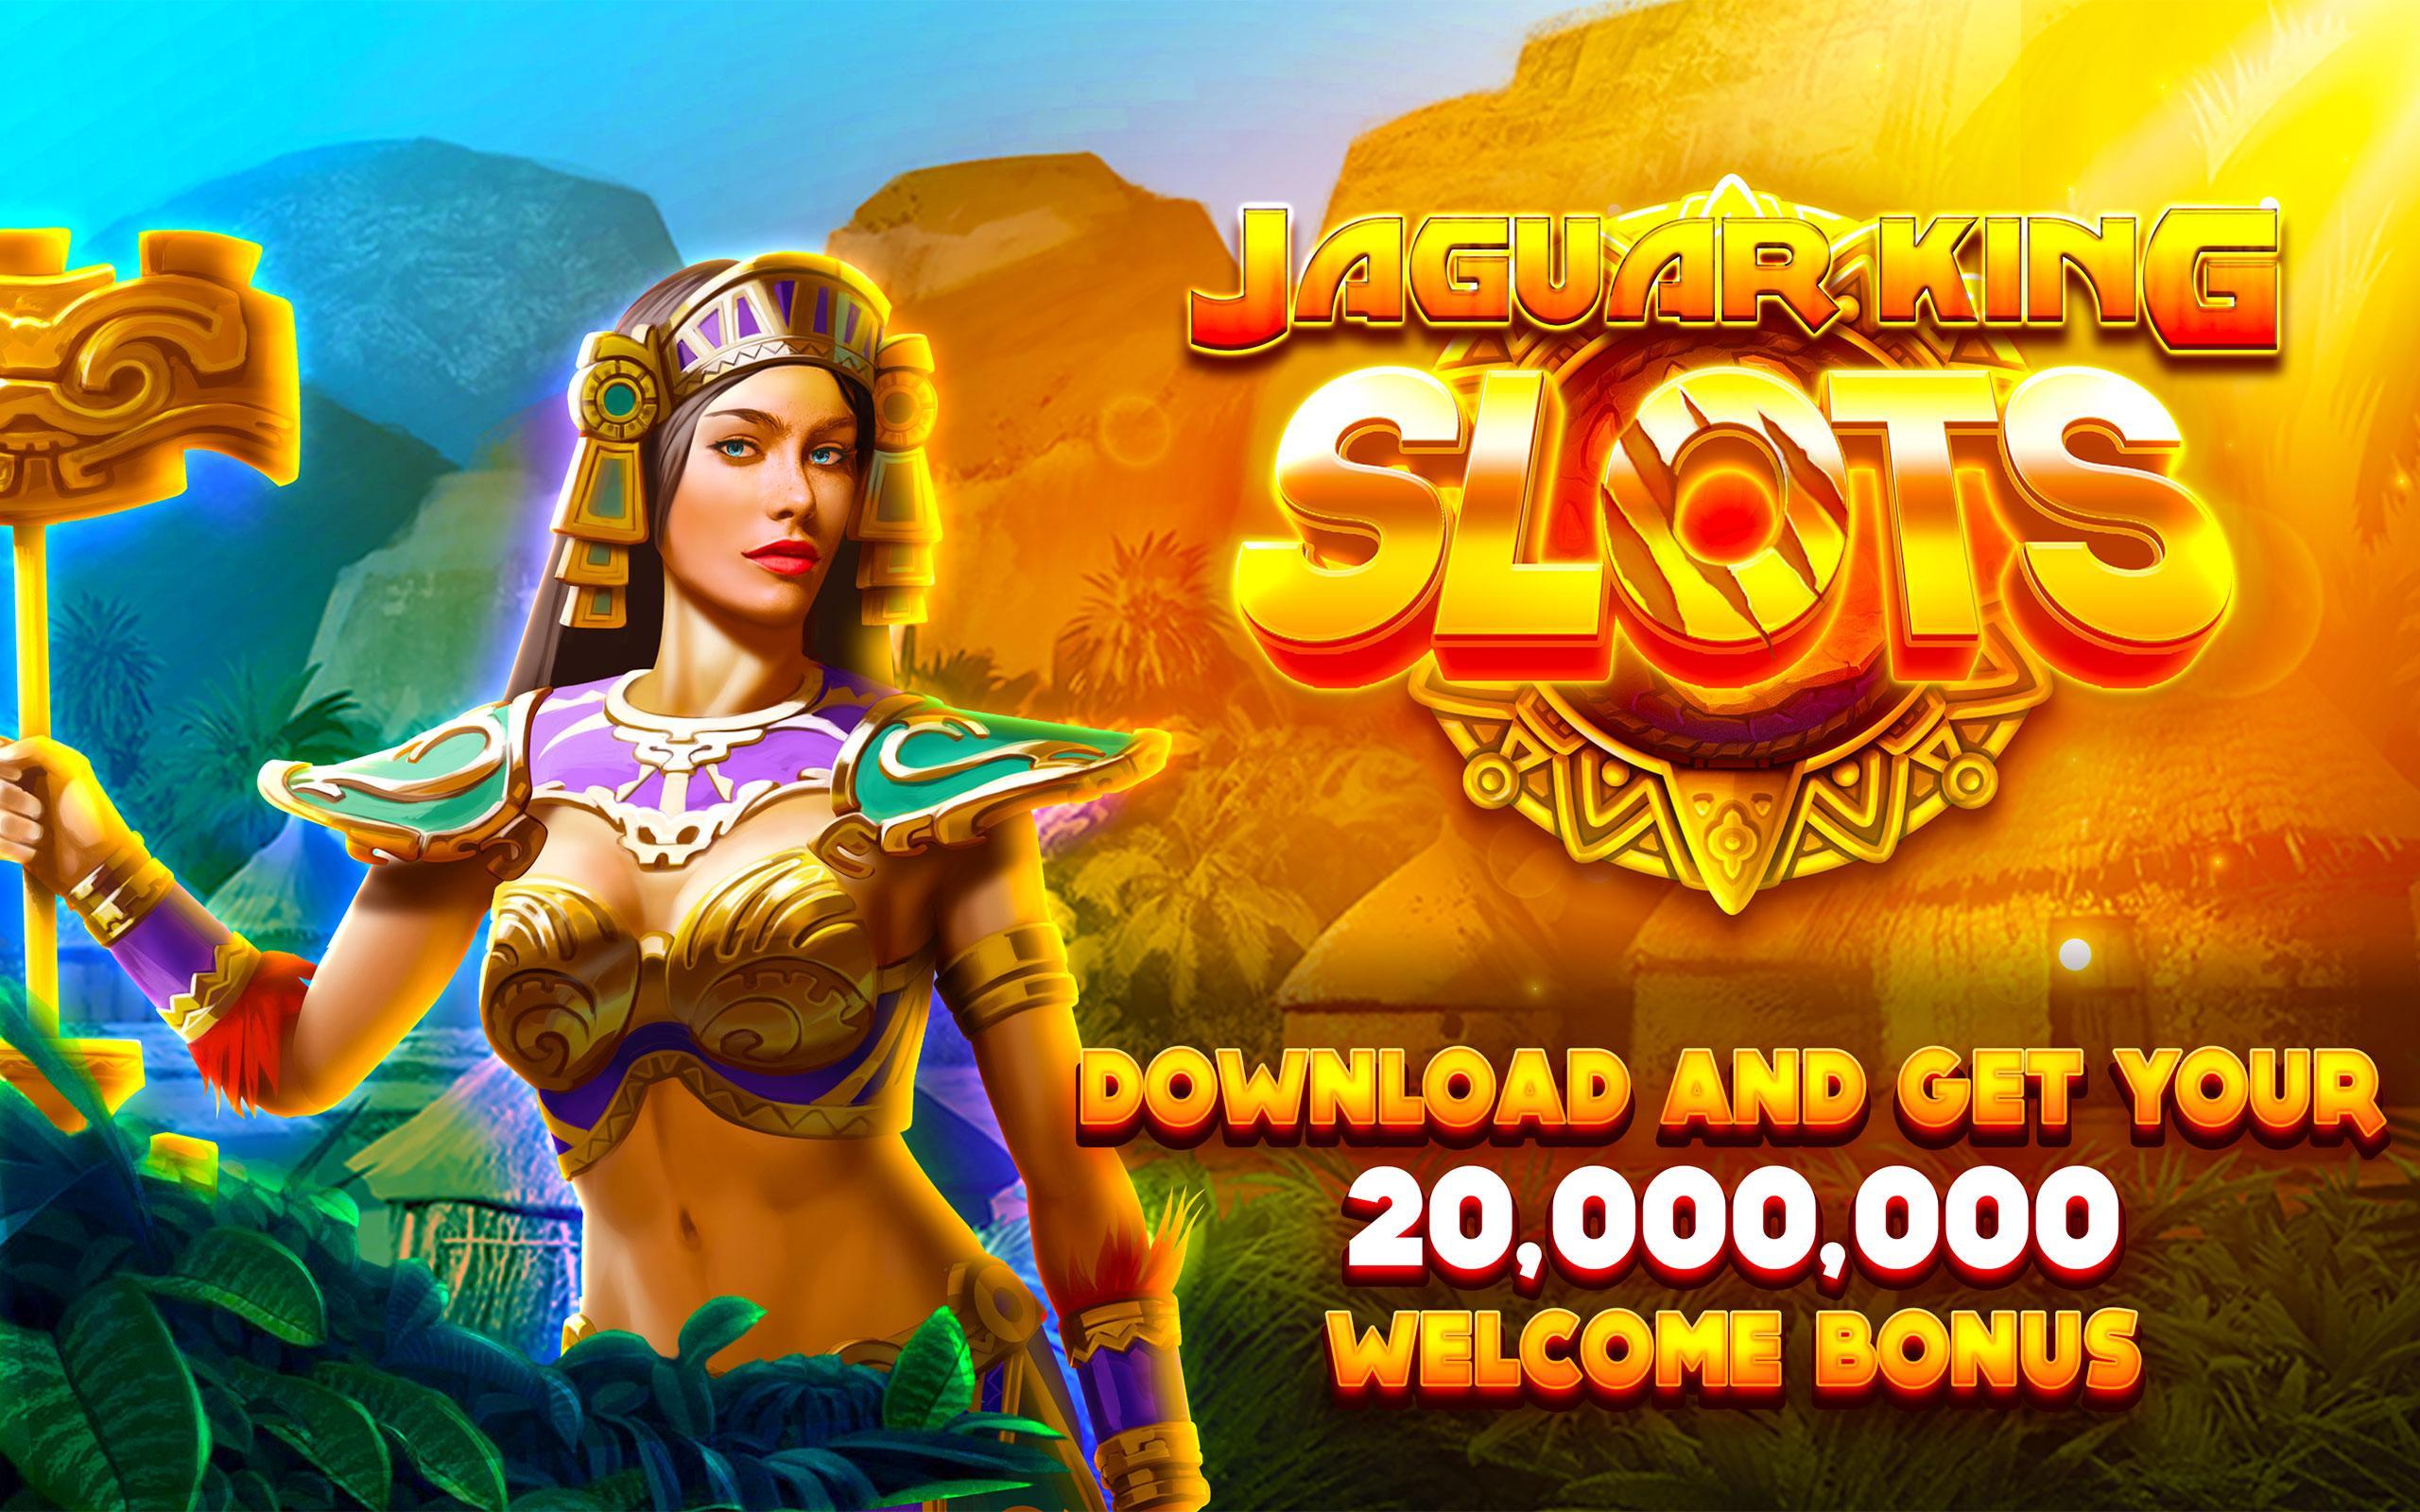 Slots Jaguar King Casino Free Vegas Slot Machine For Android Apk Download